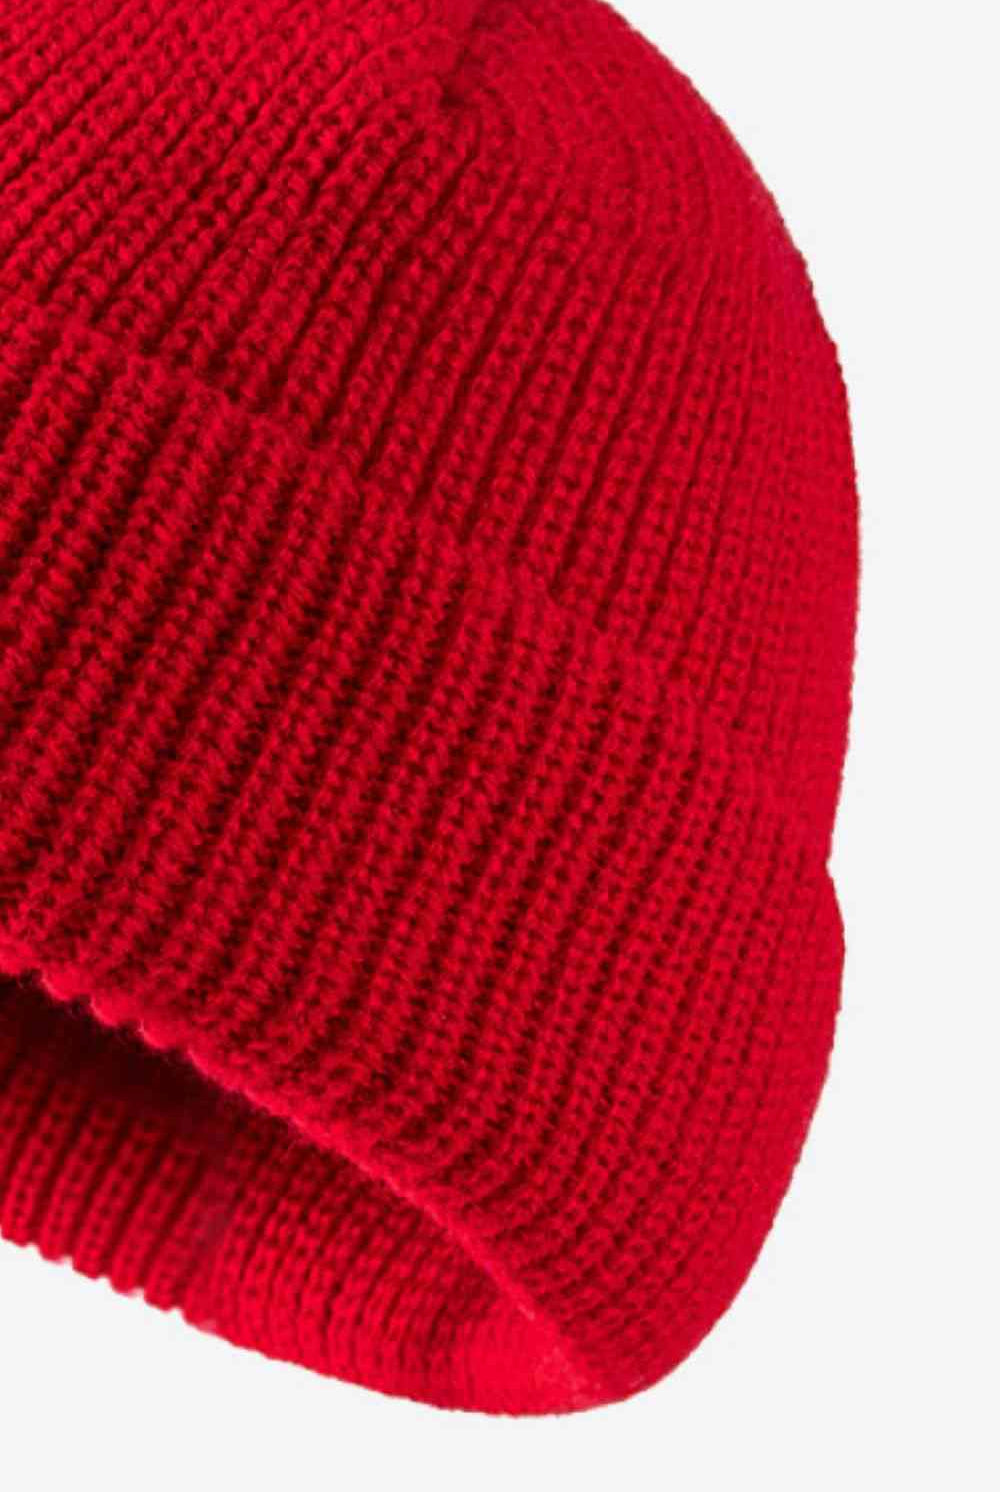 Firebrick Calling For Winter Rib-Knit Beanie Winter Accessories